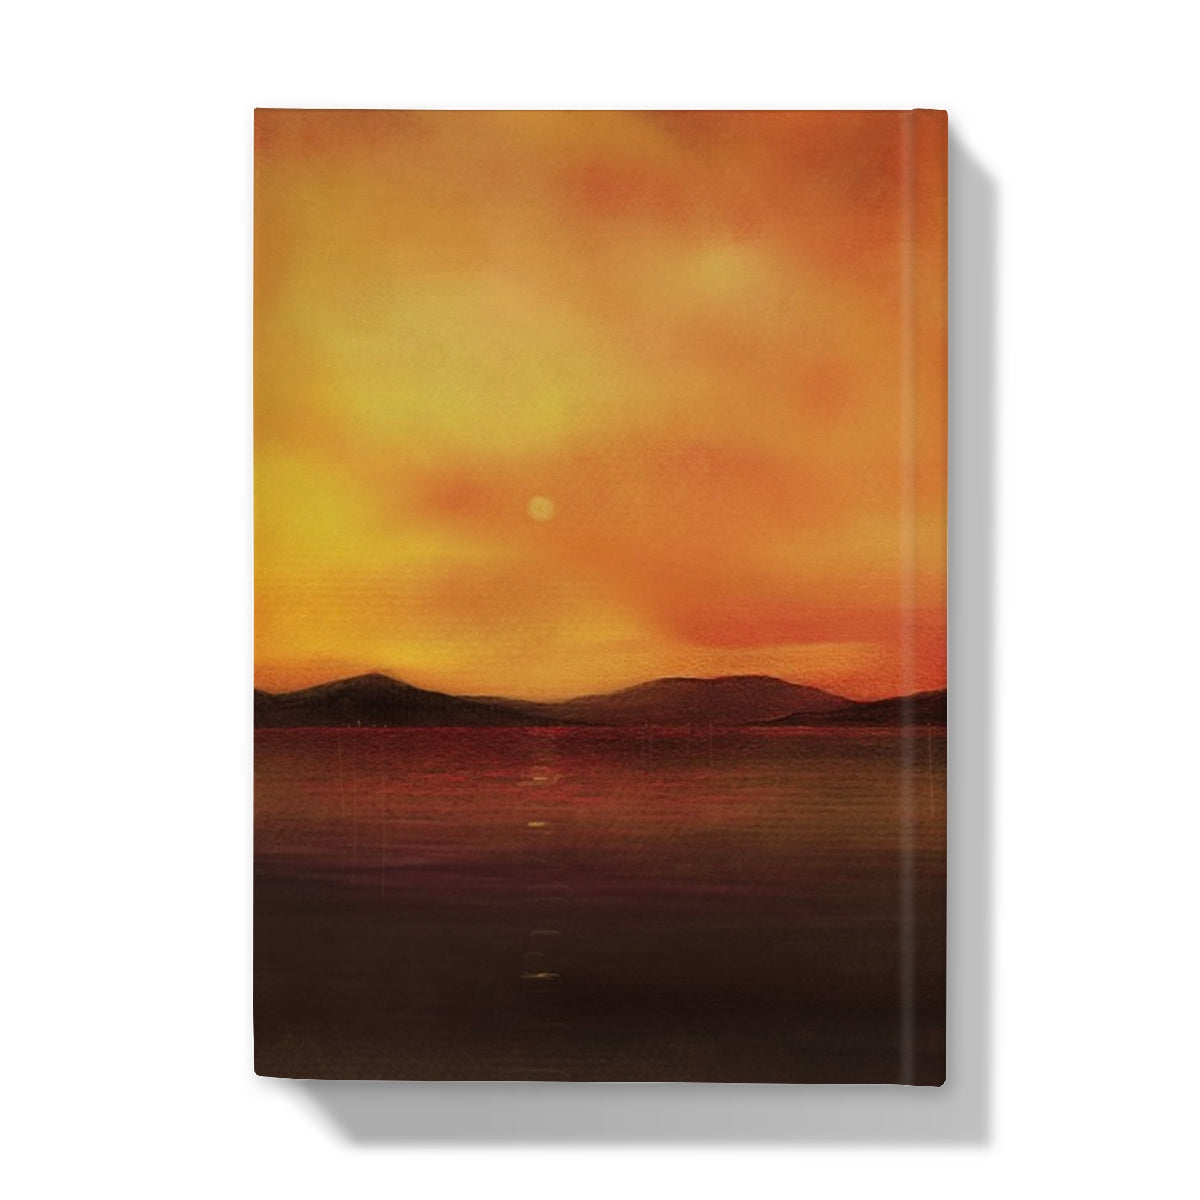 Harris Sunset Art Gifts Hardback Journal-Journals & Notebooks-Hebridean Islands Art Gallery-Paintings, Prints, Homeware, Art Gifts From Scotland By Scottish Artist Kevin Hunter